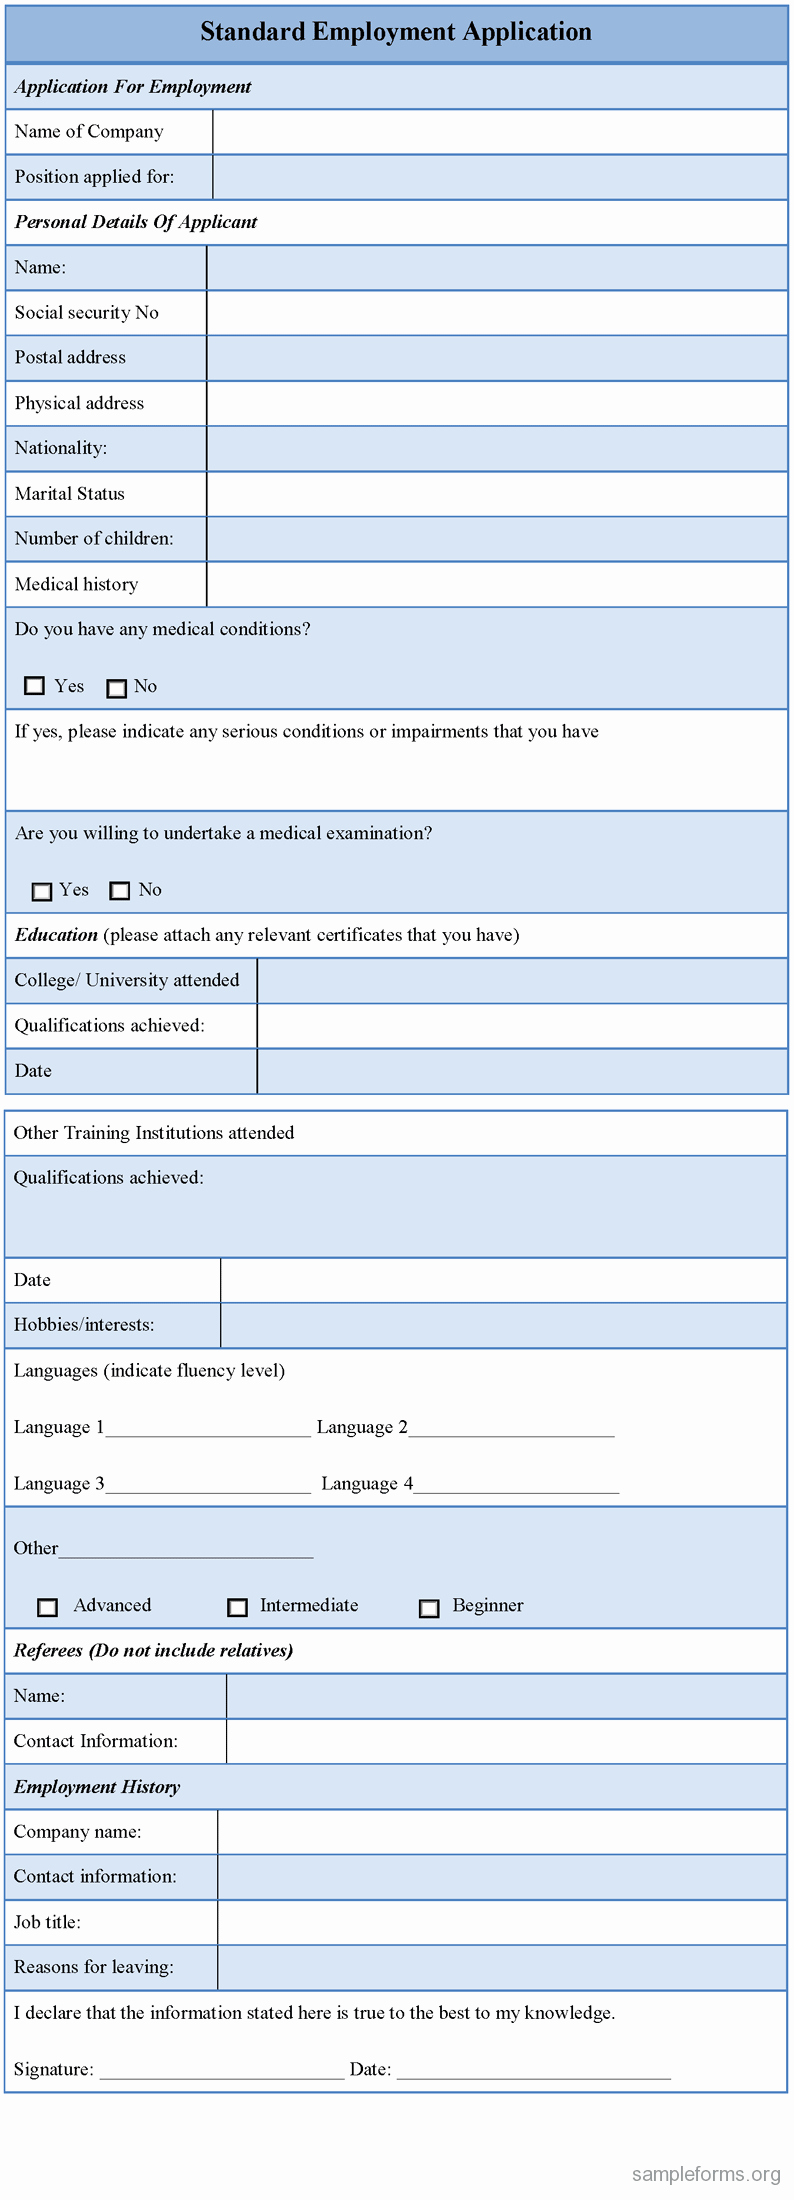 Standard Job Application forms Fresh Standard Employment Application form Sample forms